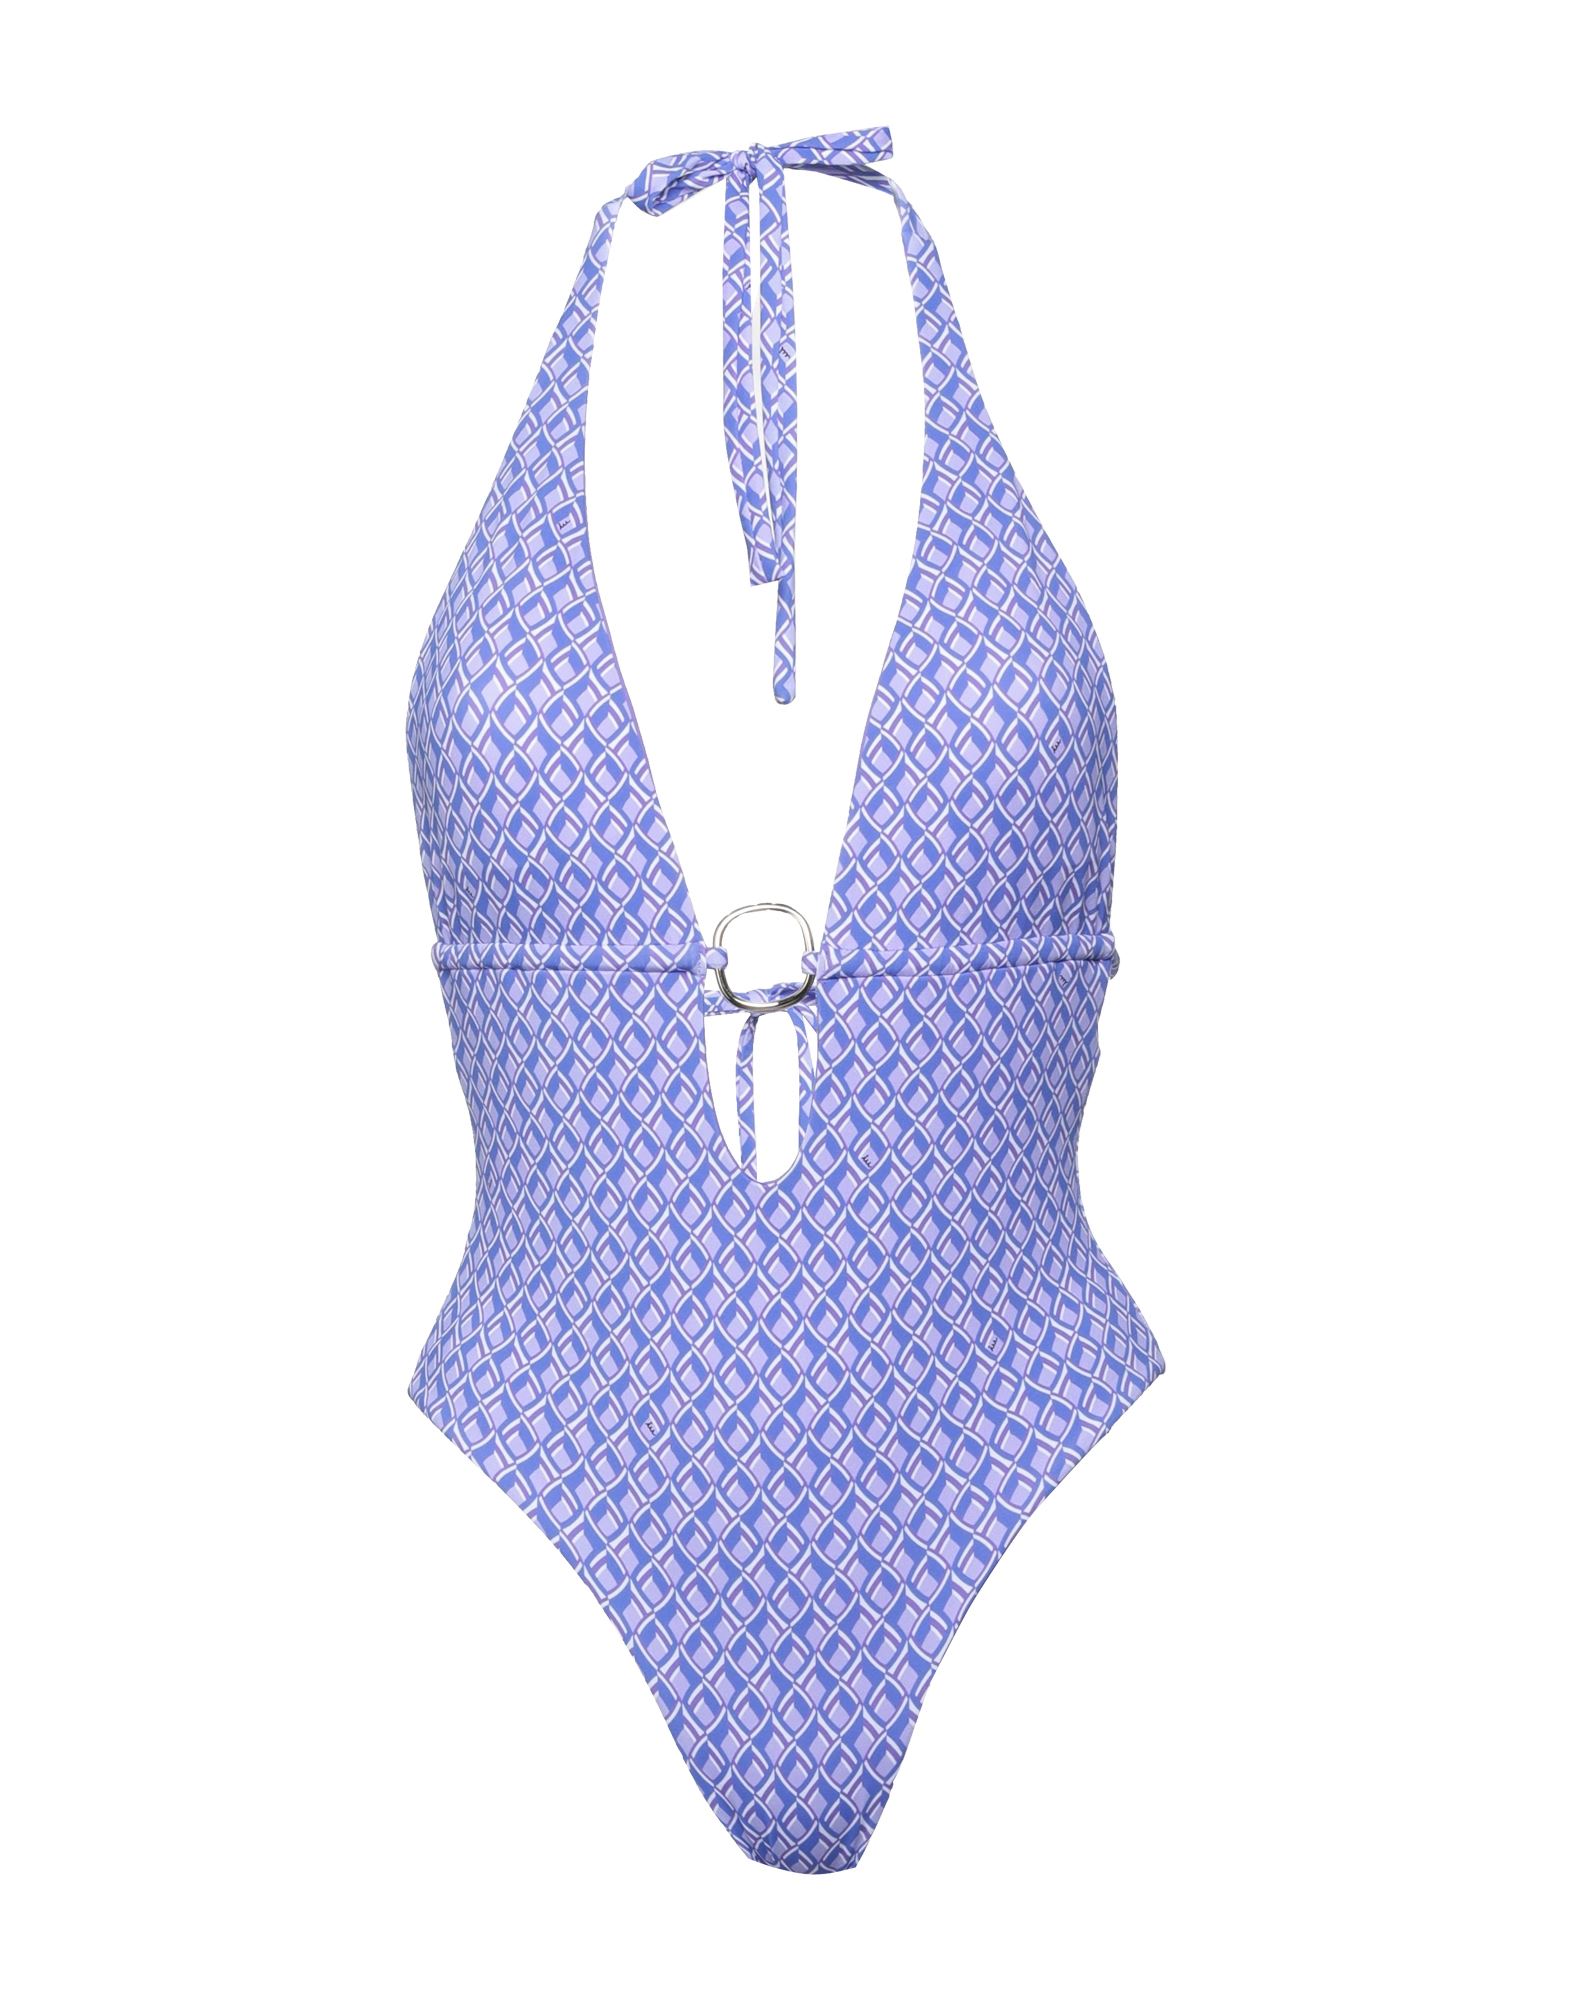 Iu Rita Mennoia One-piece Swimsuits In Purple